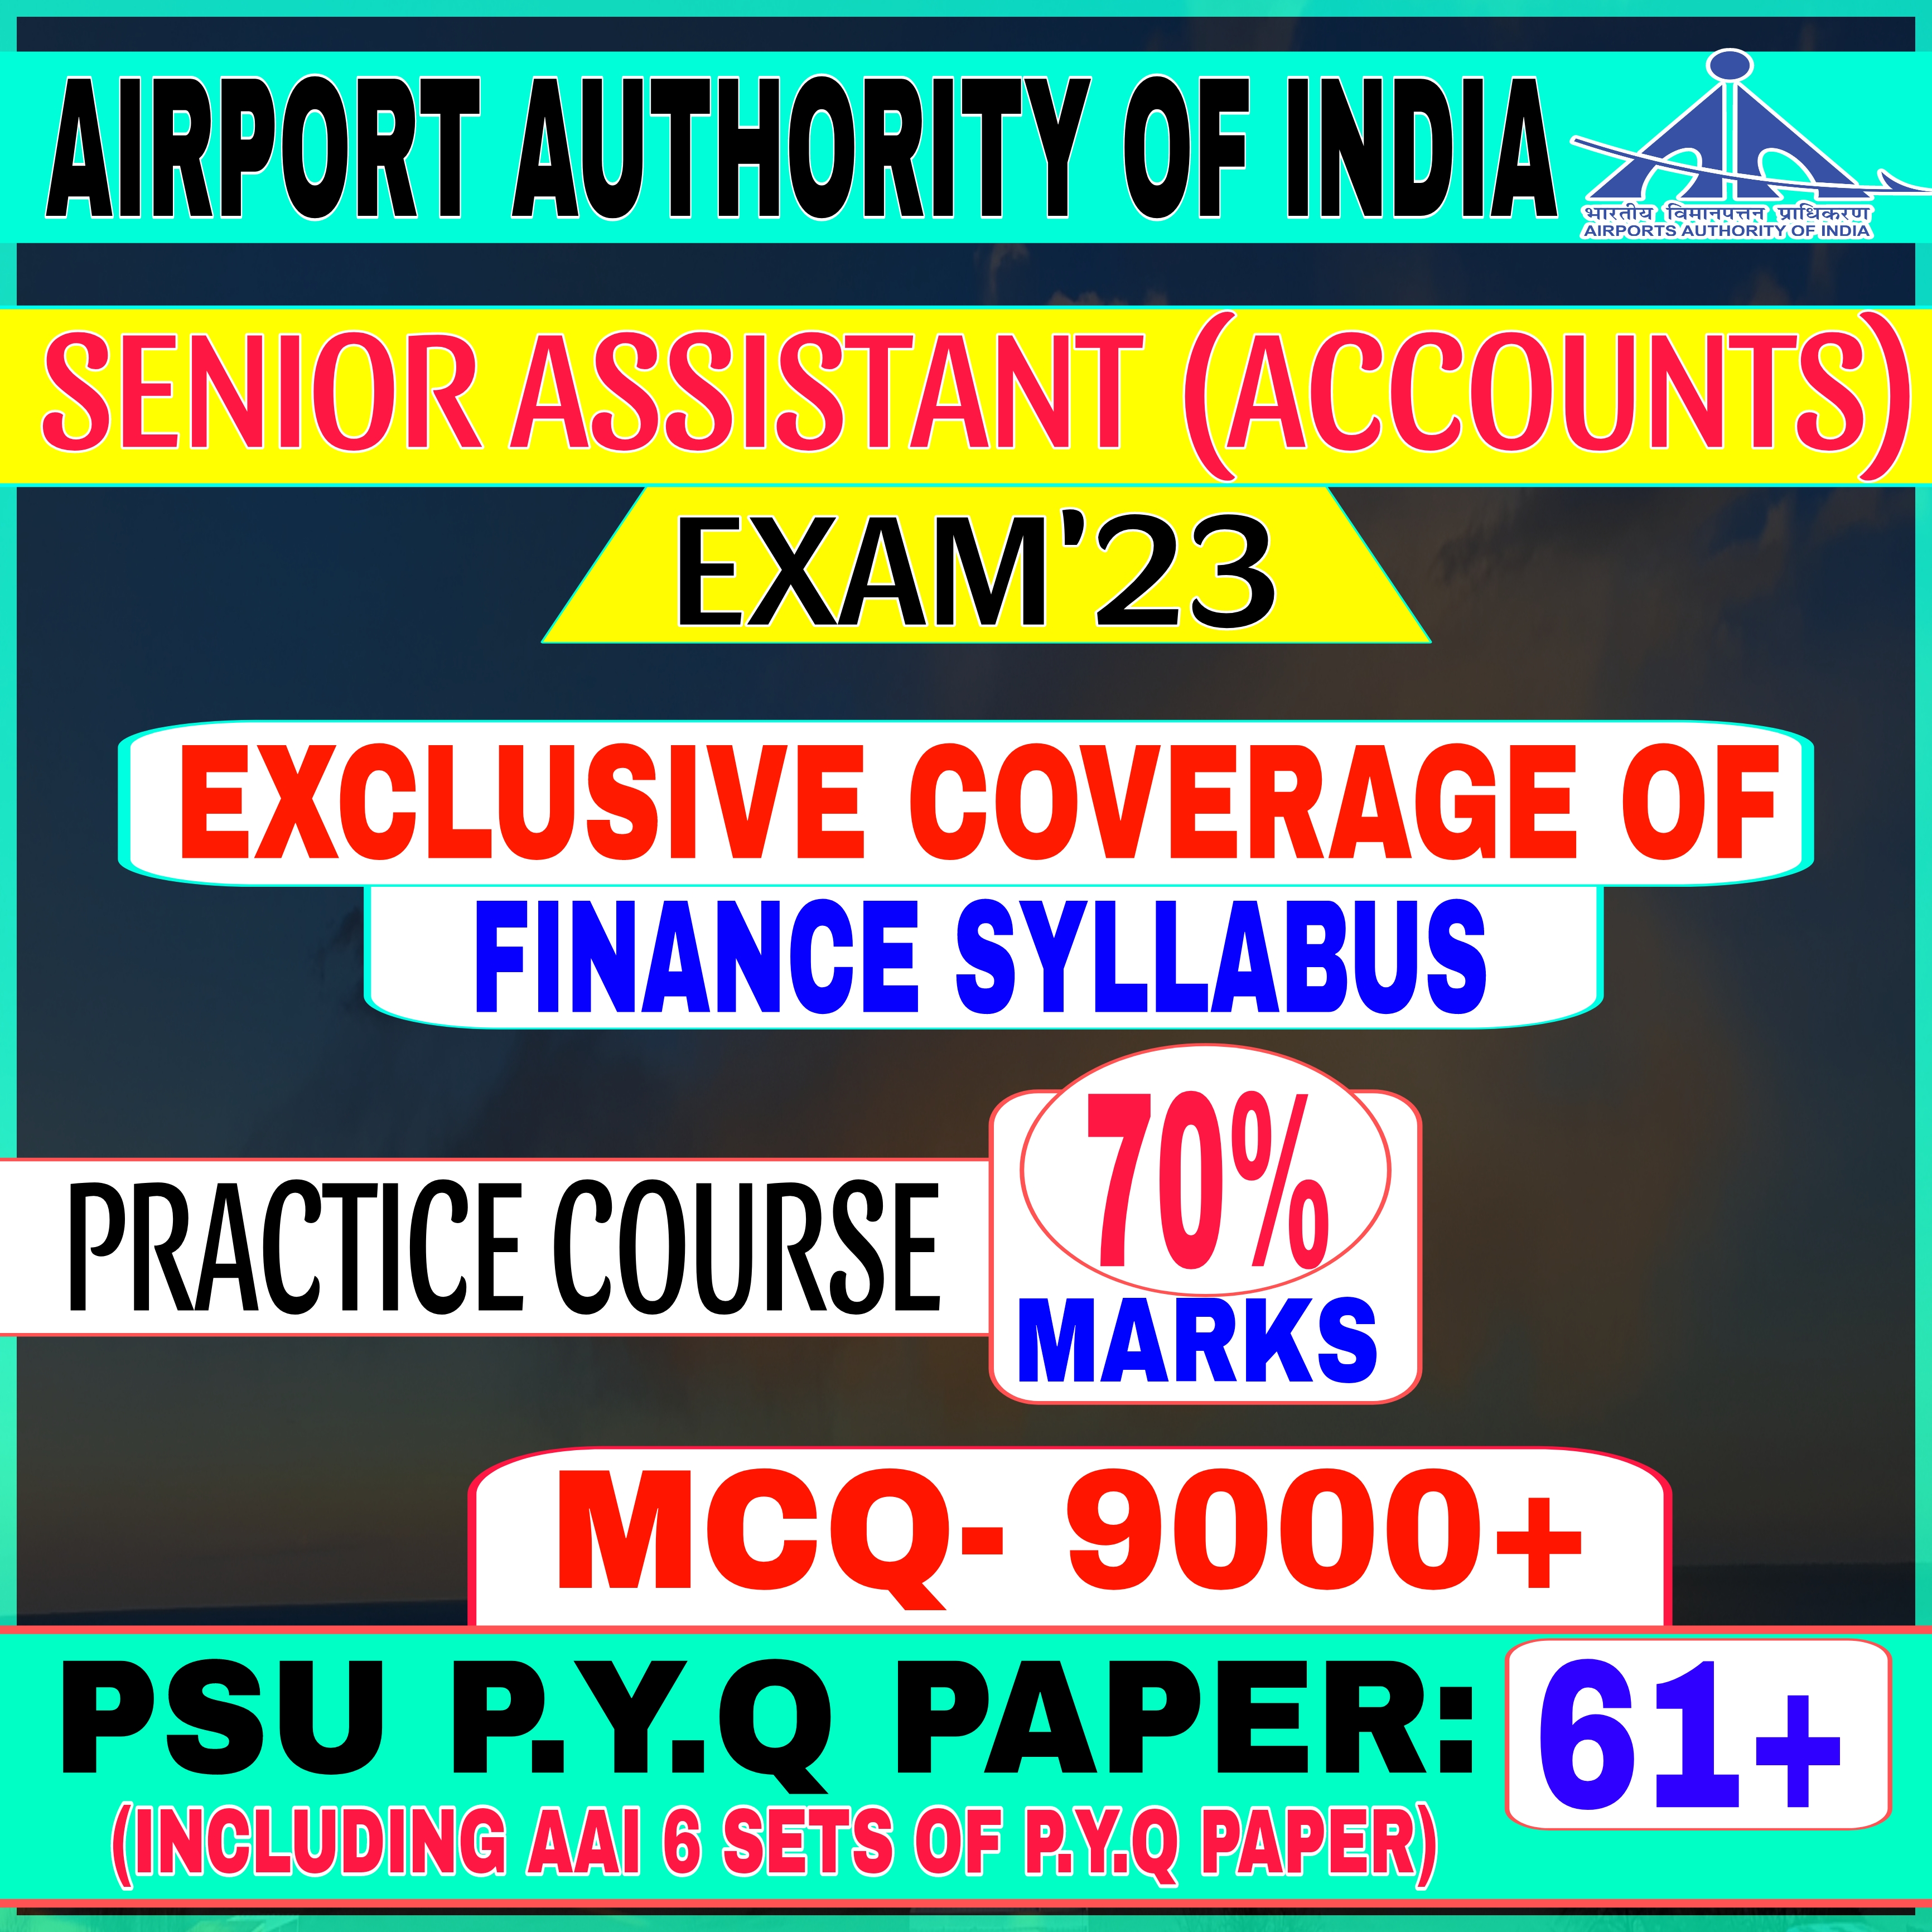 Airport Authority of India (AAI) Senior Assistant (Accounts) Course Exam 2023-2024